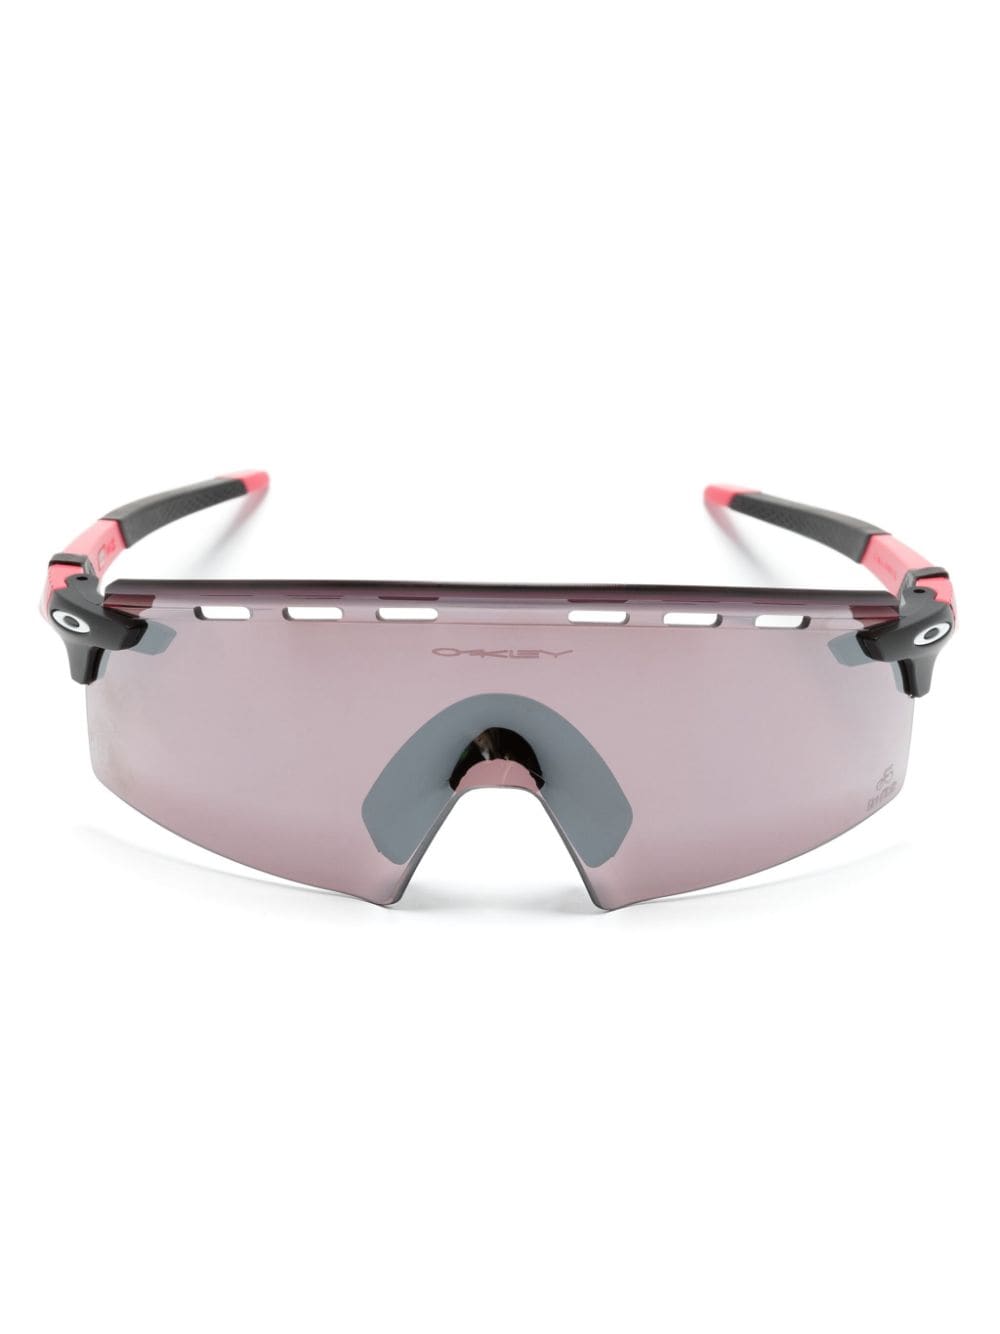 Encoder Strike Vented tinted sunglasses<BR/><BR/>